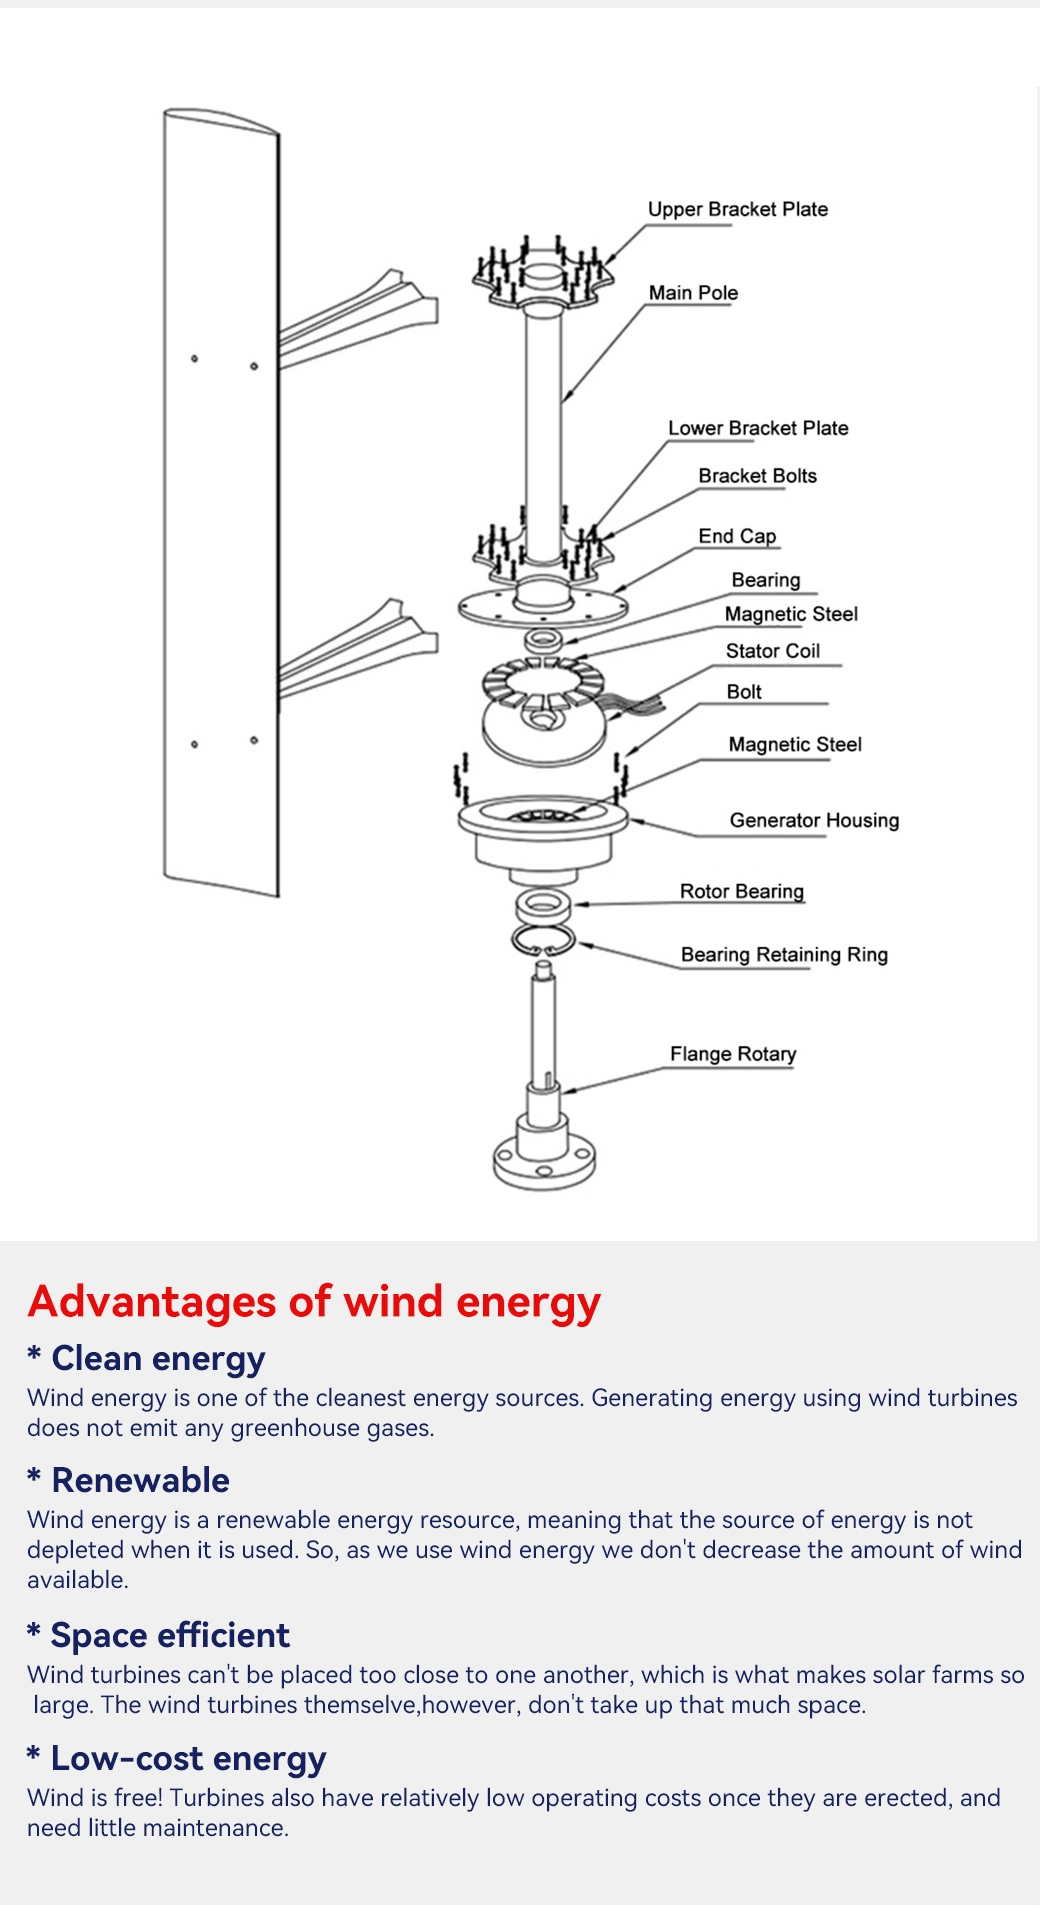 Esg 10kw 240V Wind Turbine Generator System on Grid Solar Inverter Price Grid Tie Inverter